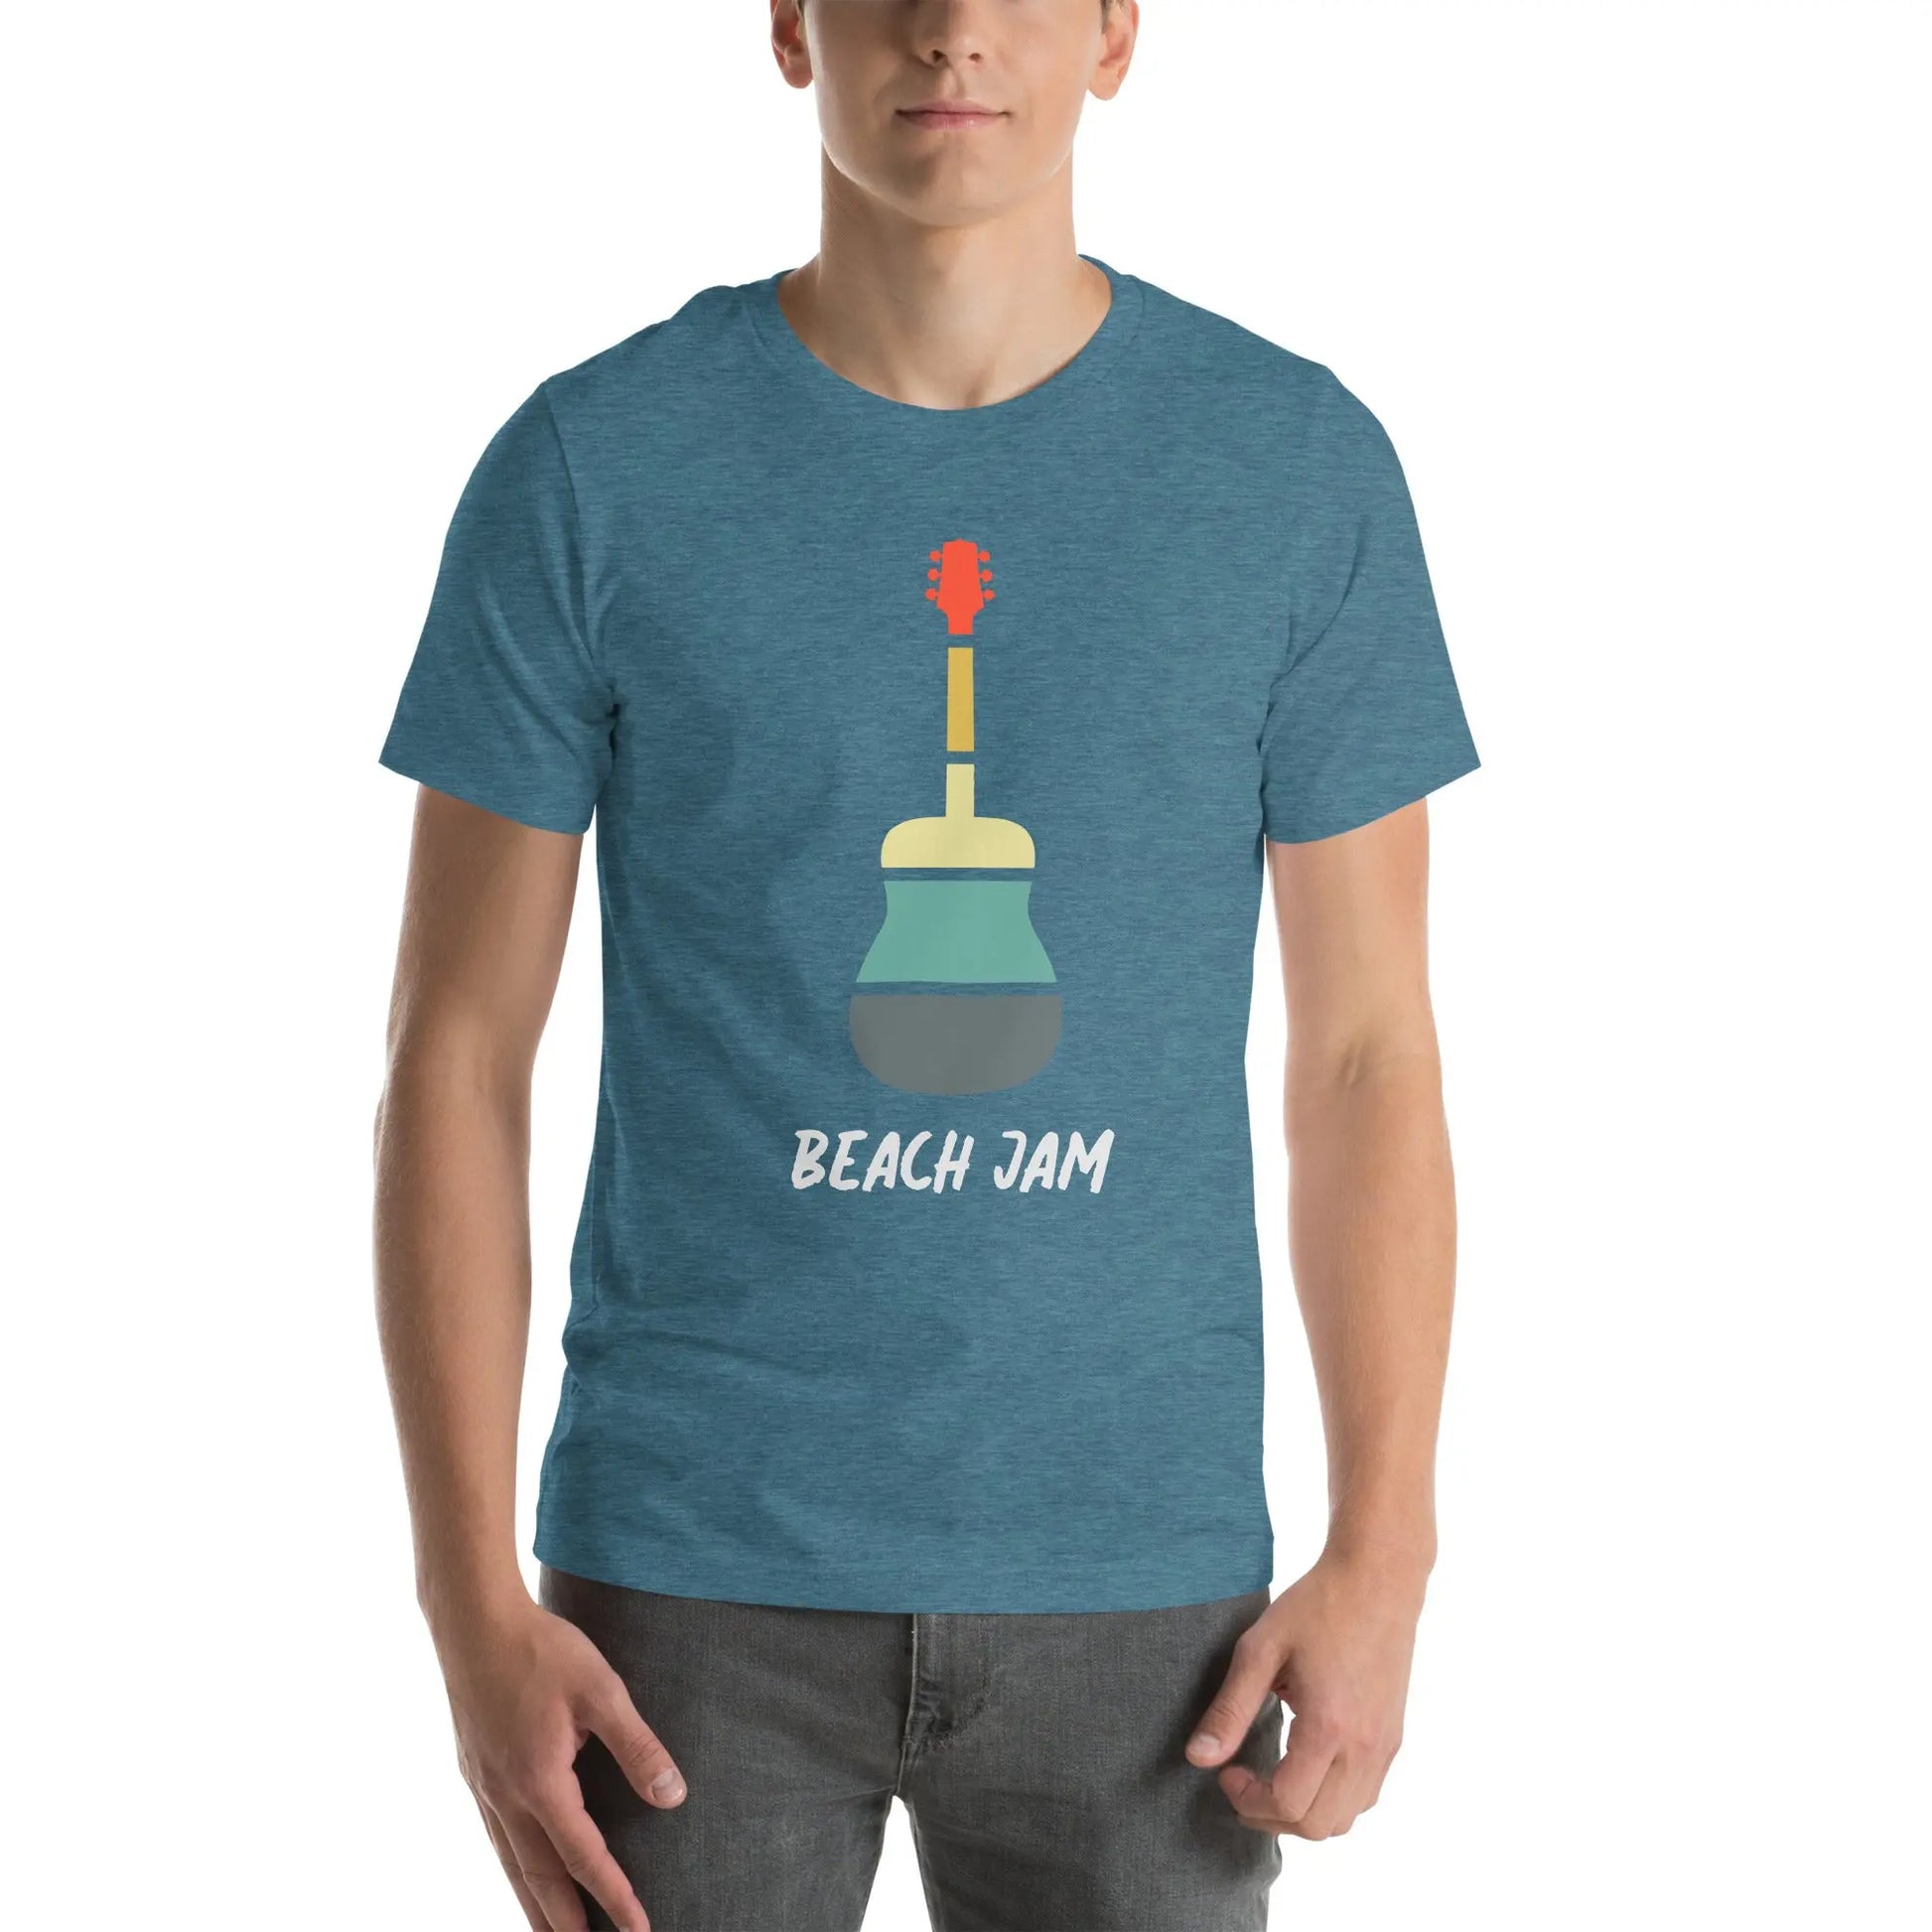 Beach Jam with this Coastal Adult Unisex T-Shirt - Coastal Journeyz2552342_8481